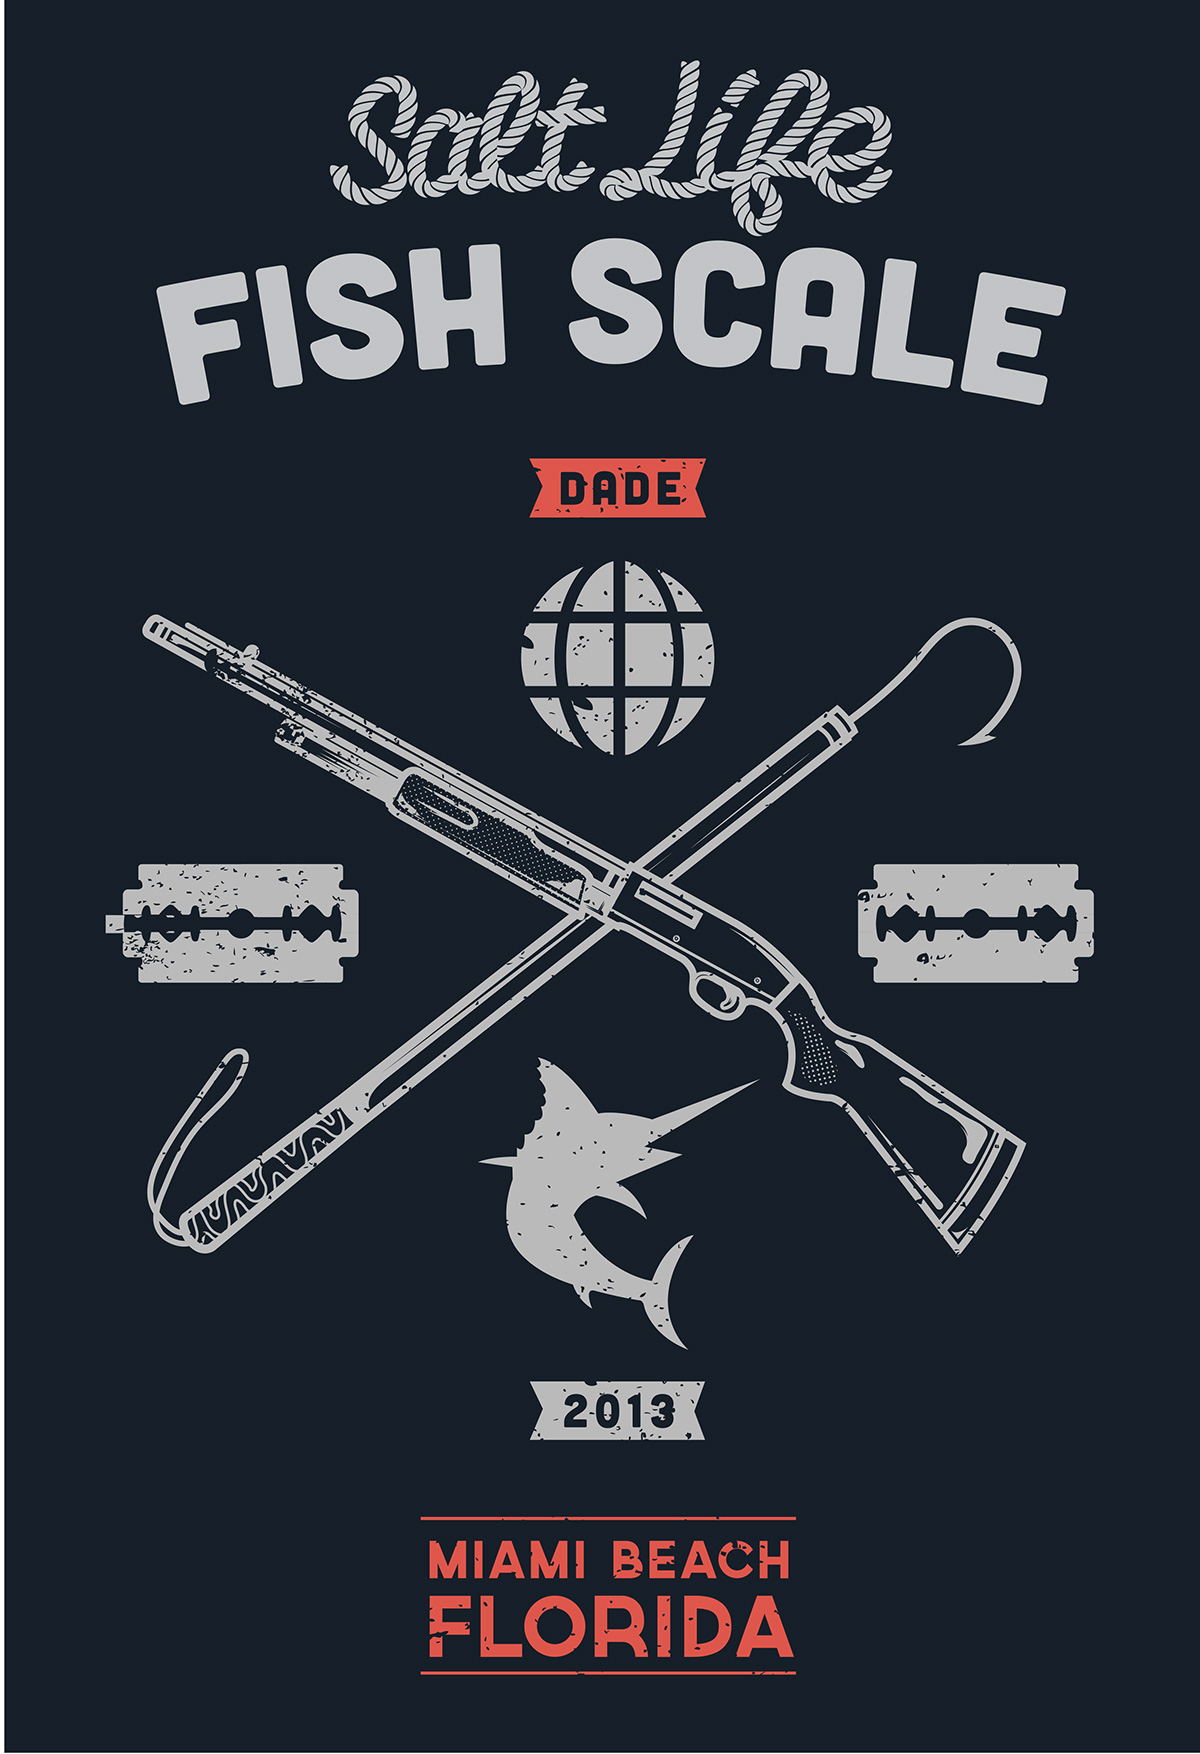 Adobe Portfolio #dadewear #tshirt #fishscale